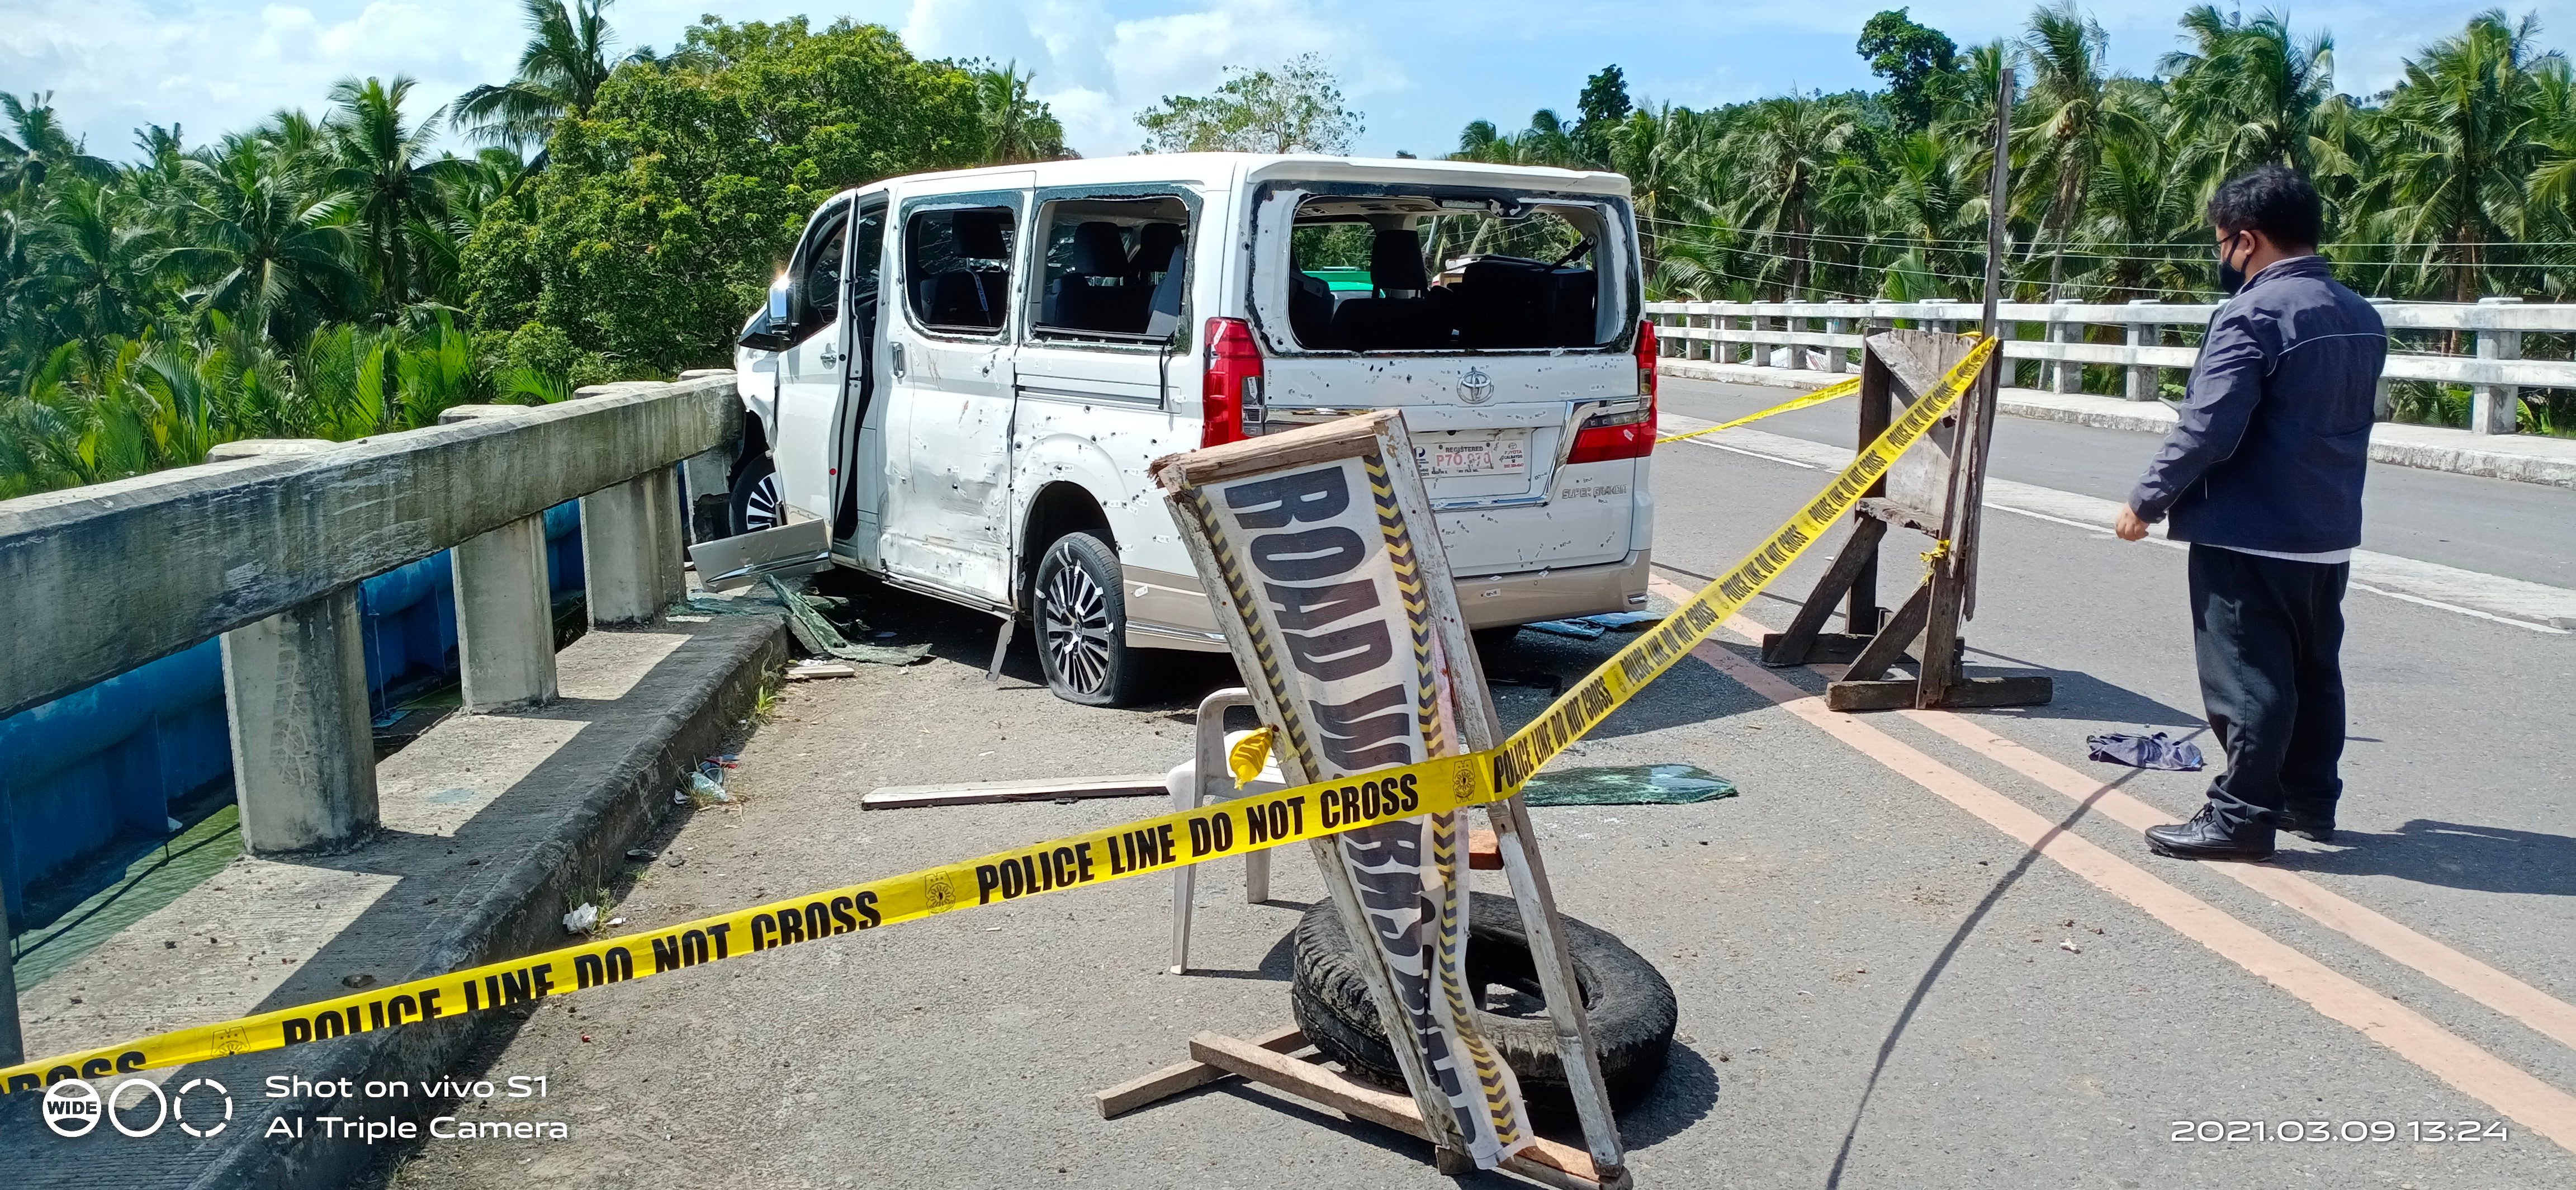 Admin cases filed against cops involved in Calbayog mayor Aquino slay